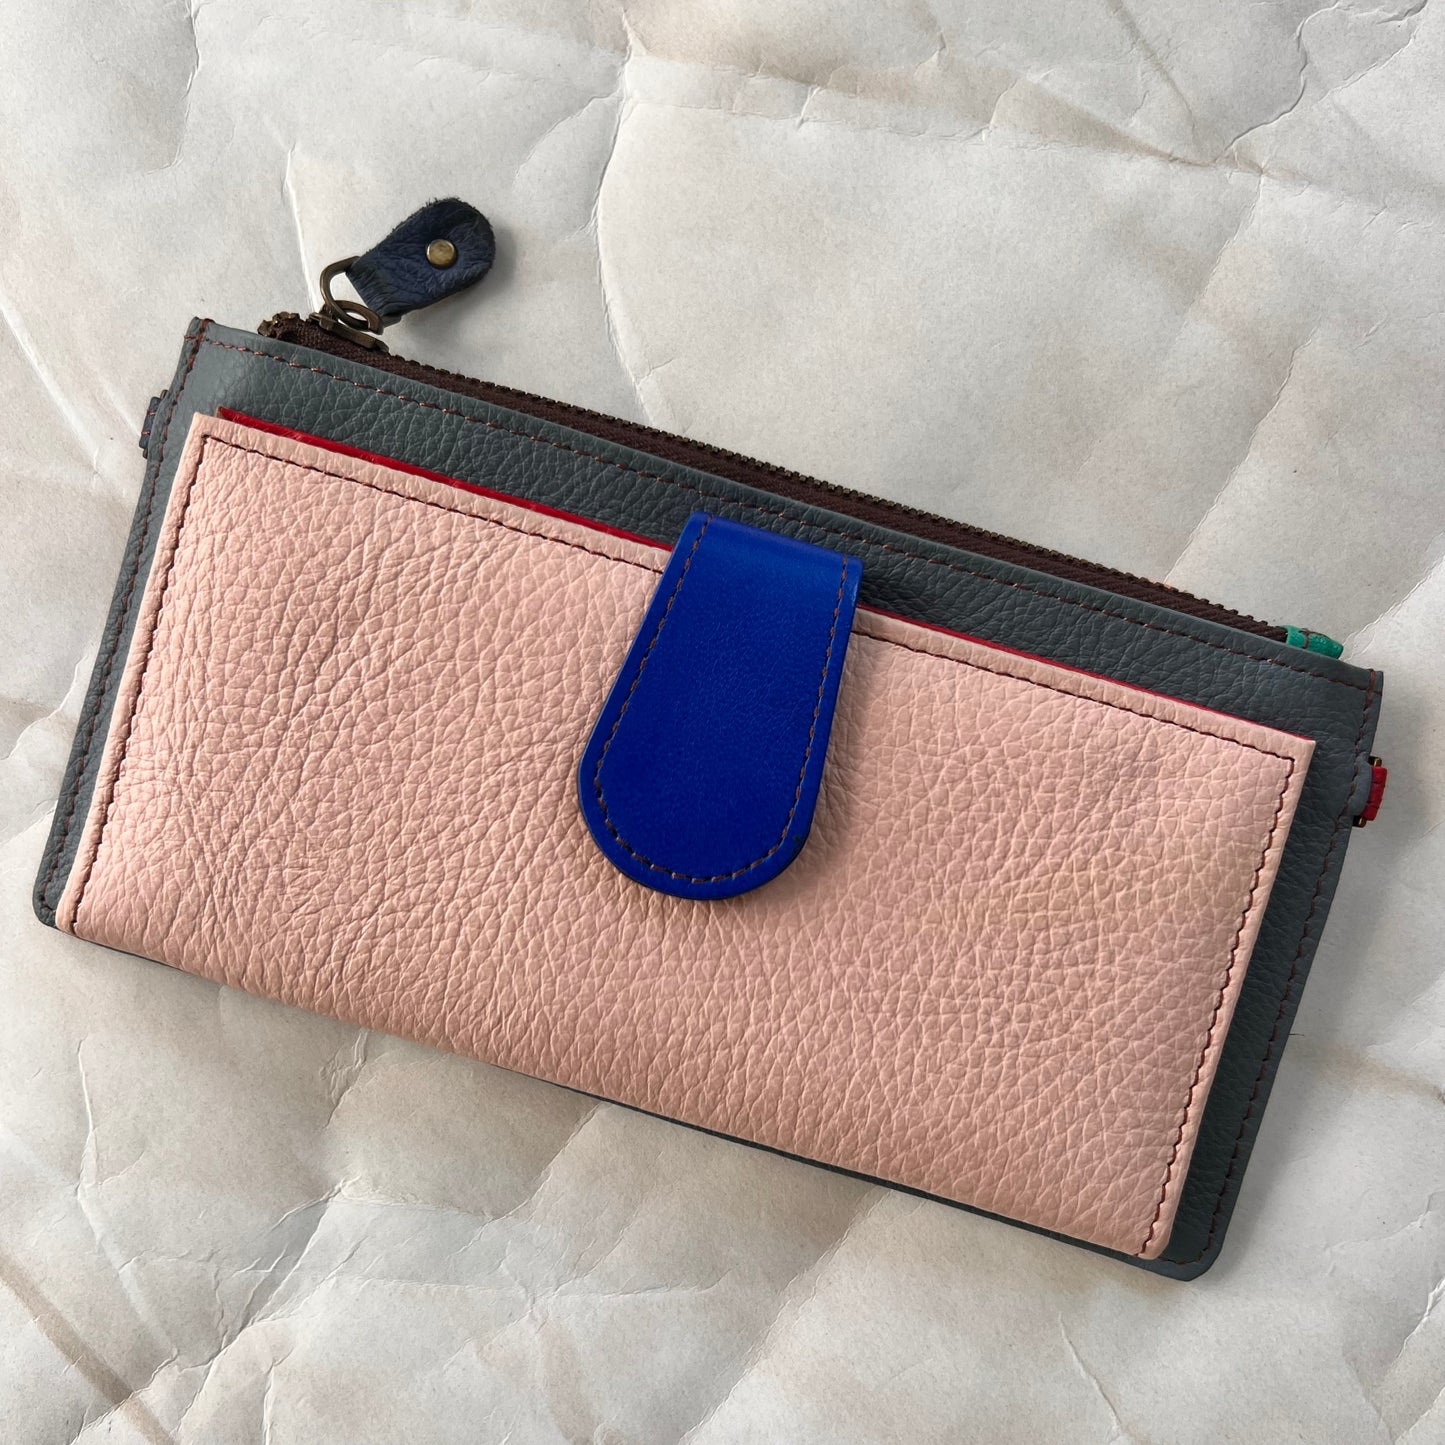 rectanglar kimber teal wallet with pink pocket and blue tab closure.